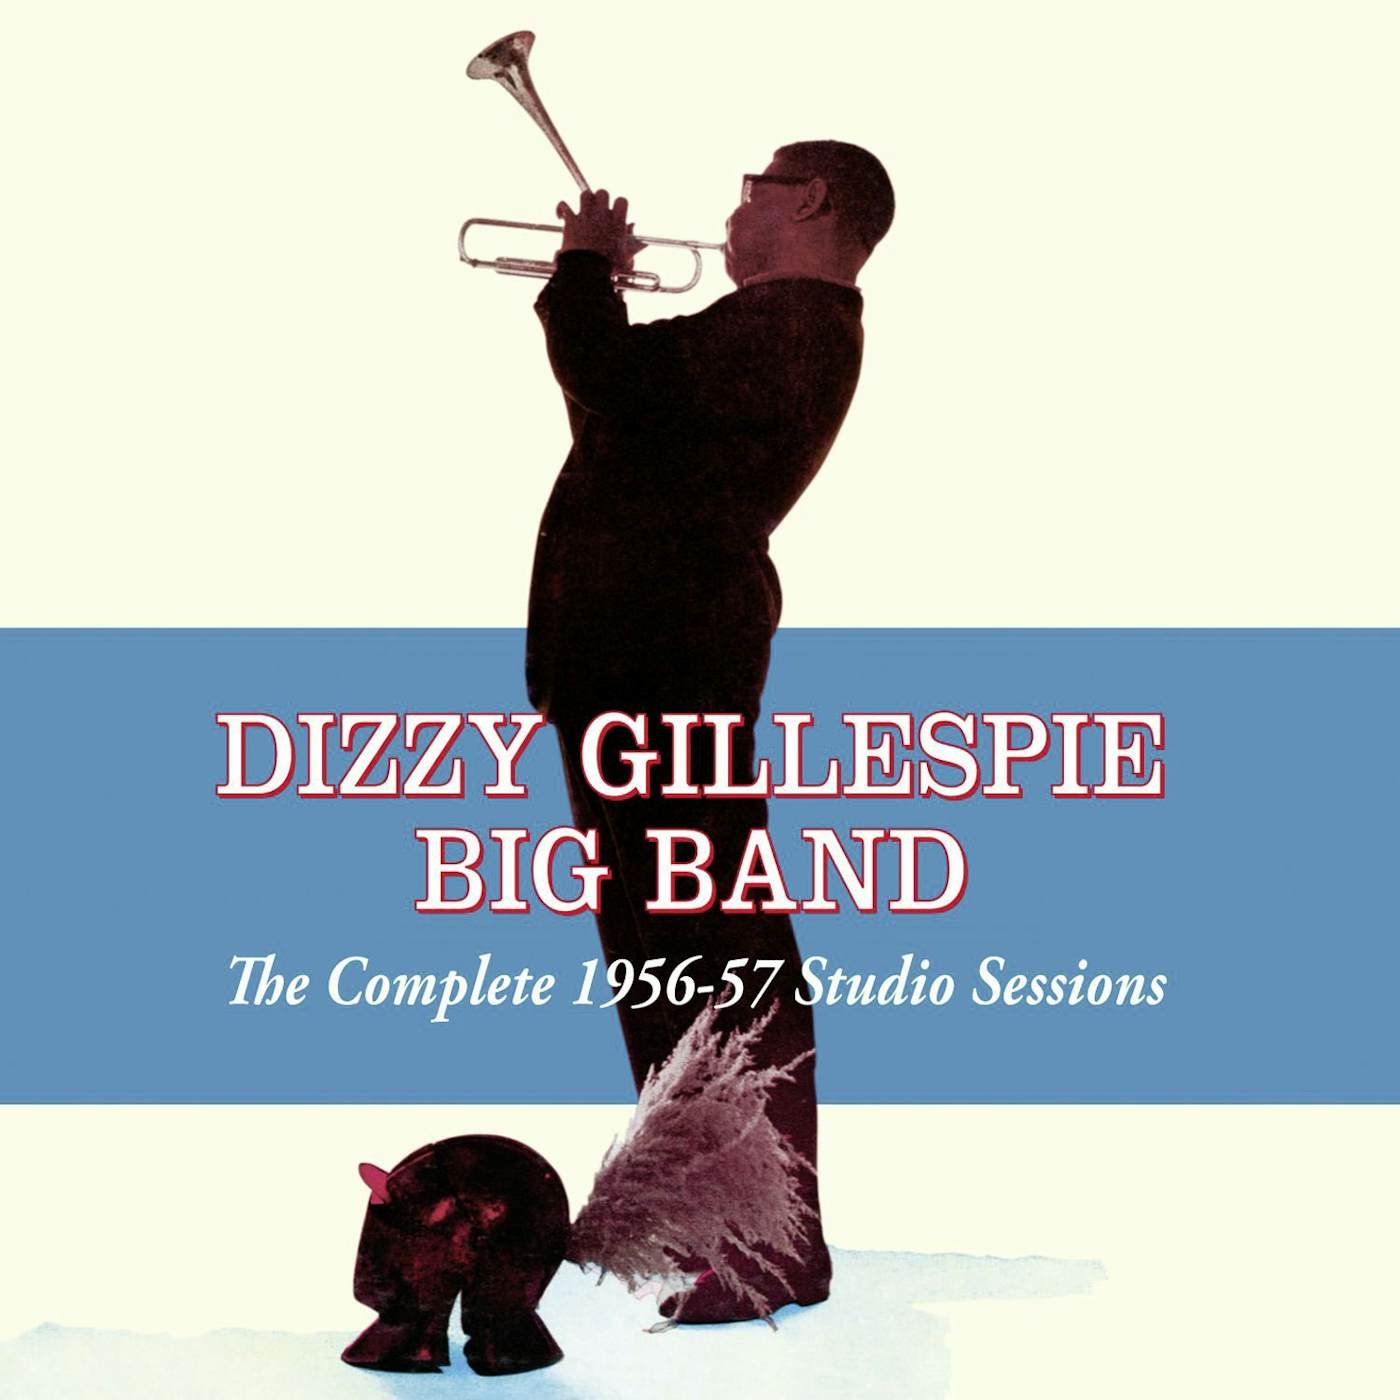 Dizzy Gillespie COMPLETE 1956-57 STUDIO SESSIONS CD